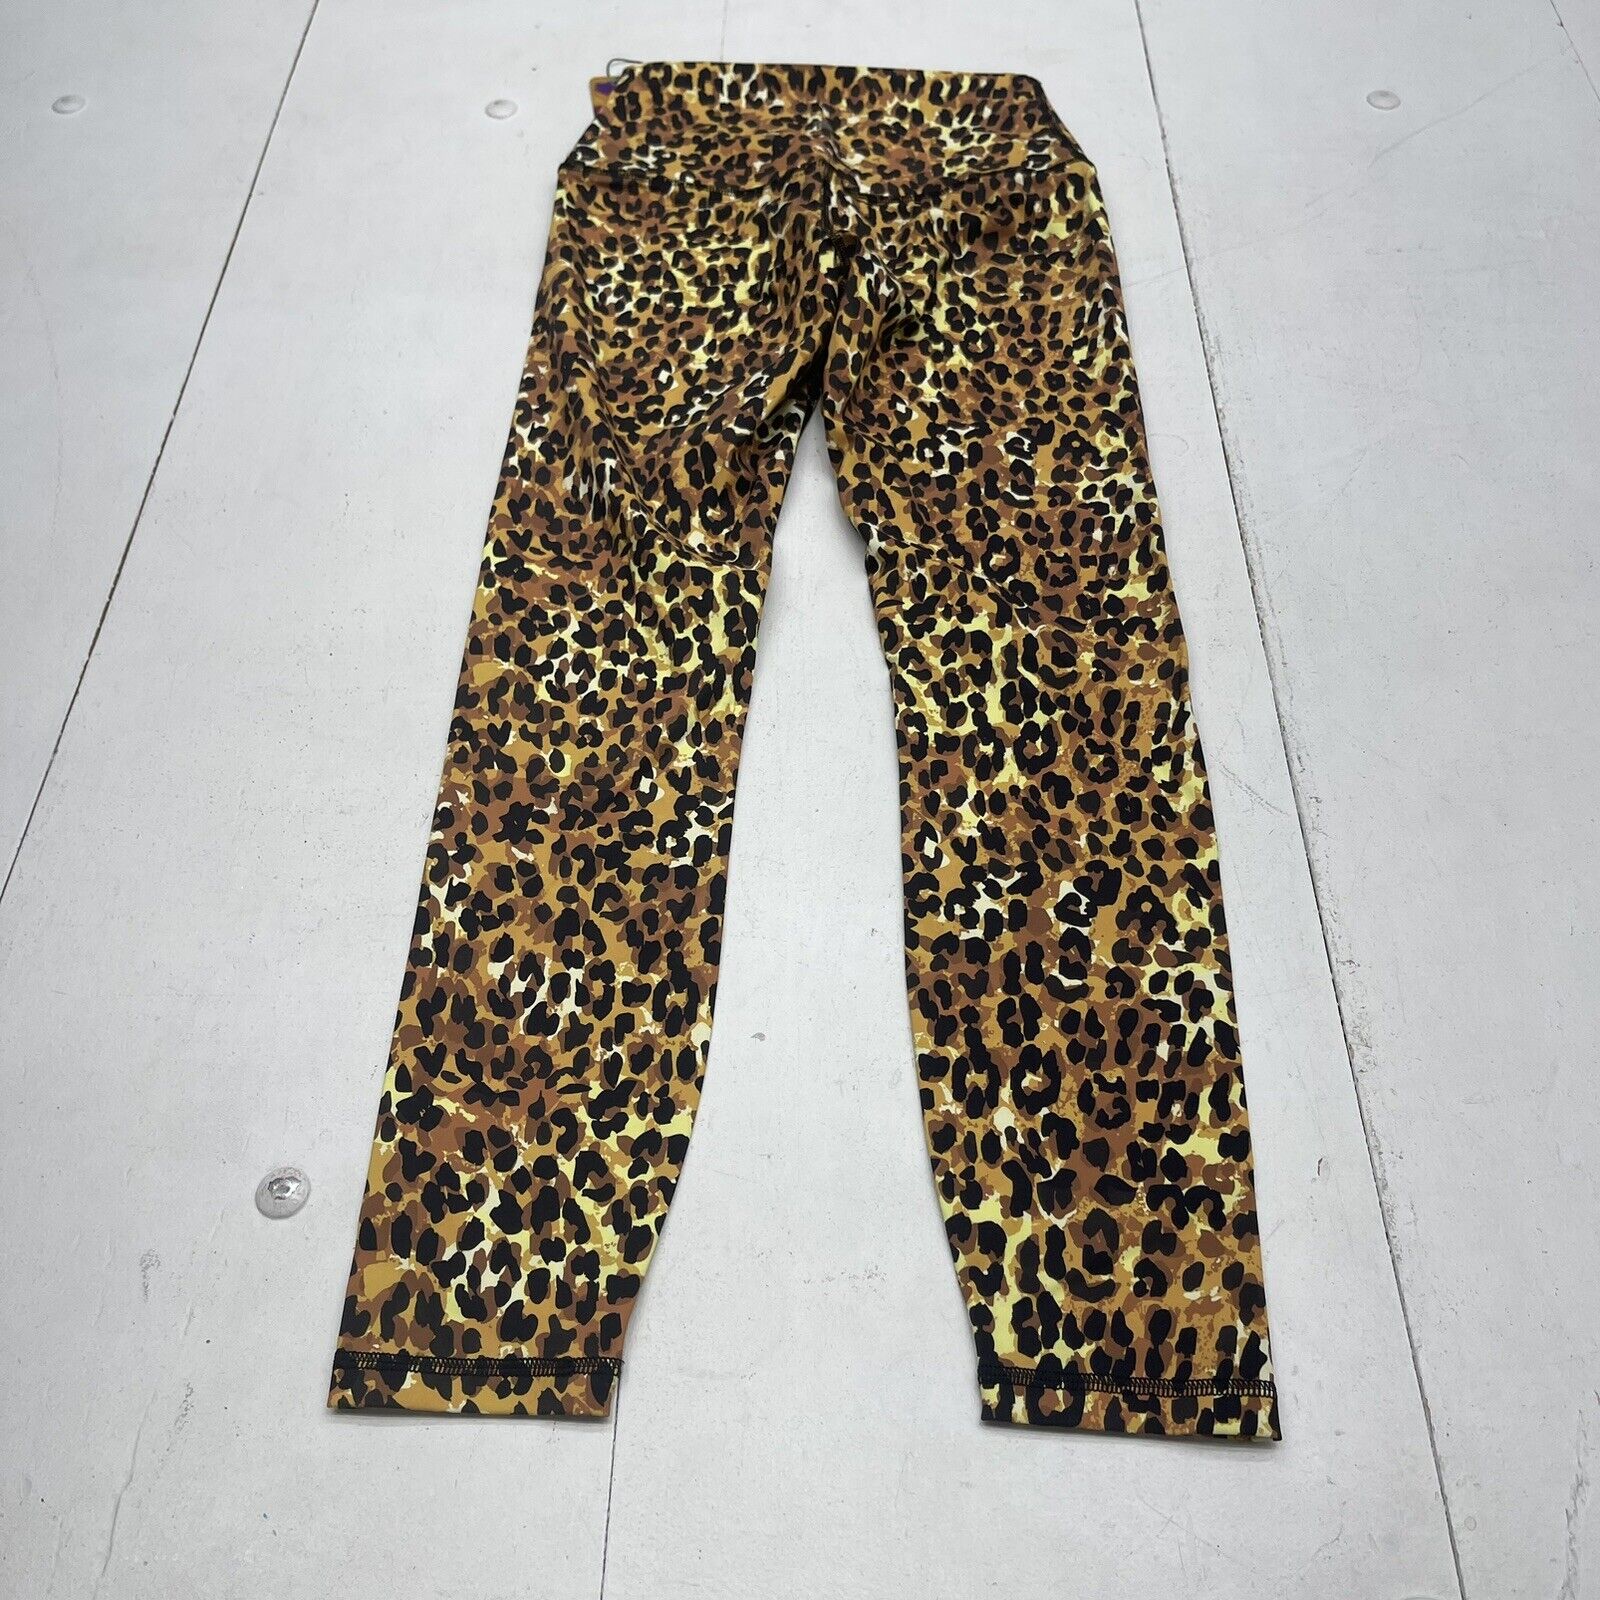 Liebergo Beauty & The Beast Leopard Print High Rise Leggings